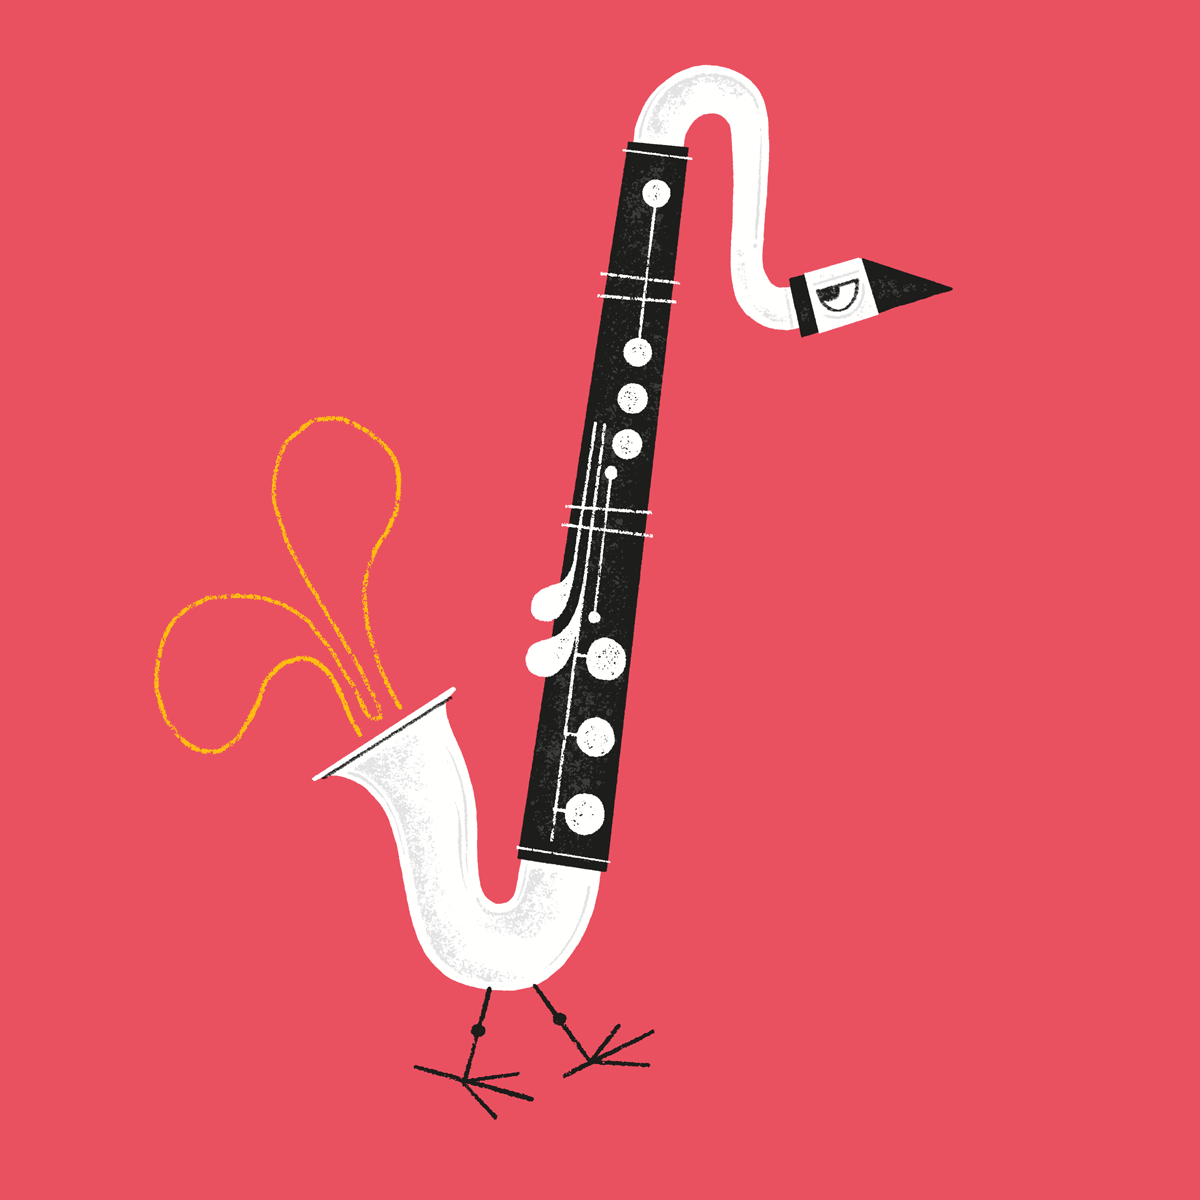 Animal or Instrument 2 Illustration